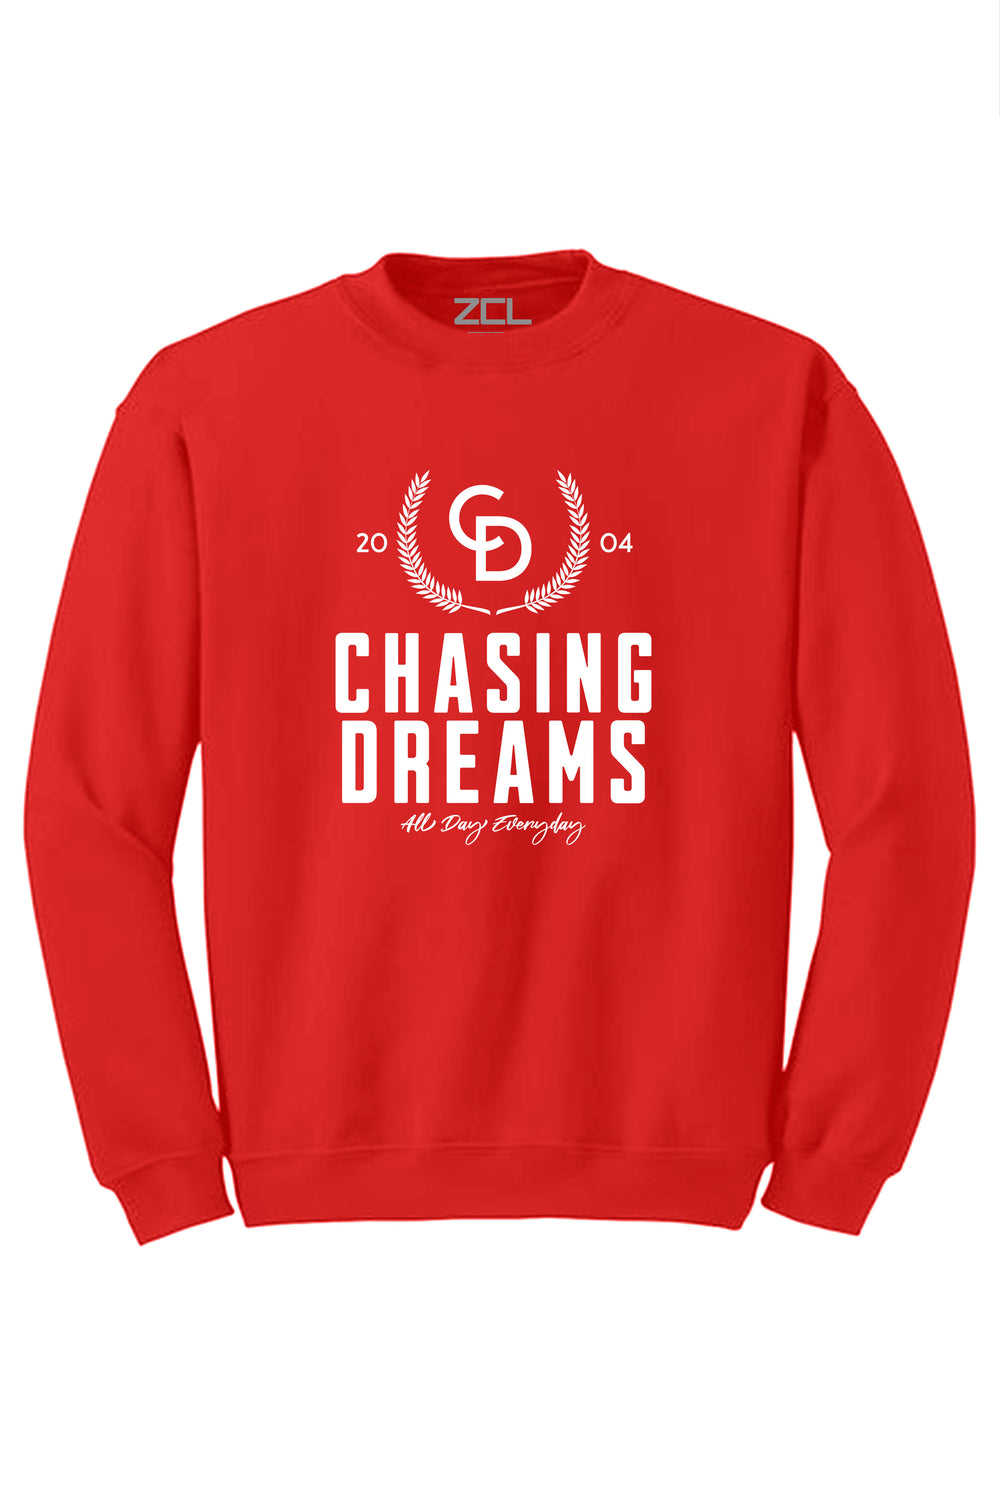 Chasing Dreams Crewneck Sweatshirt (White Logo) - Zamage